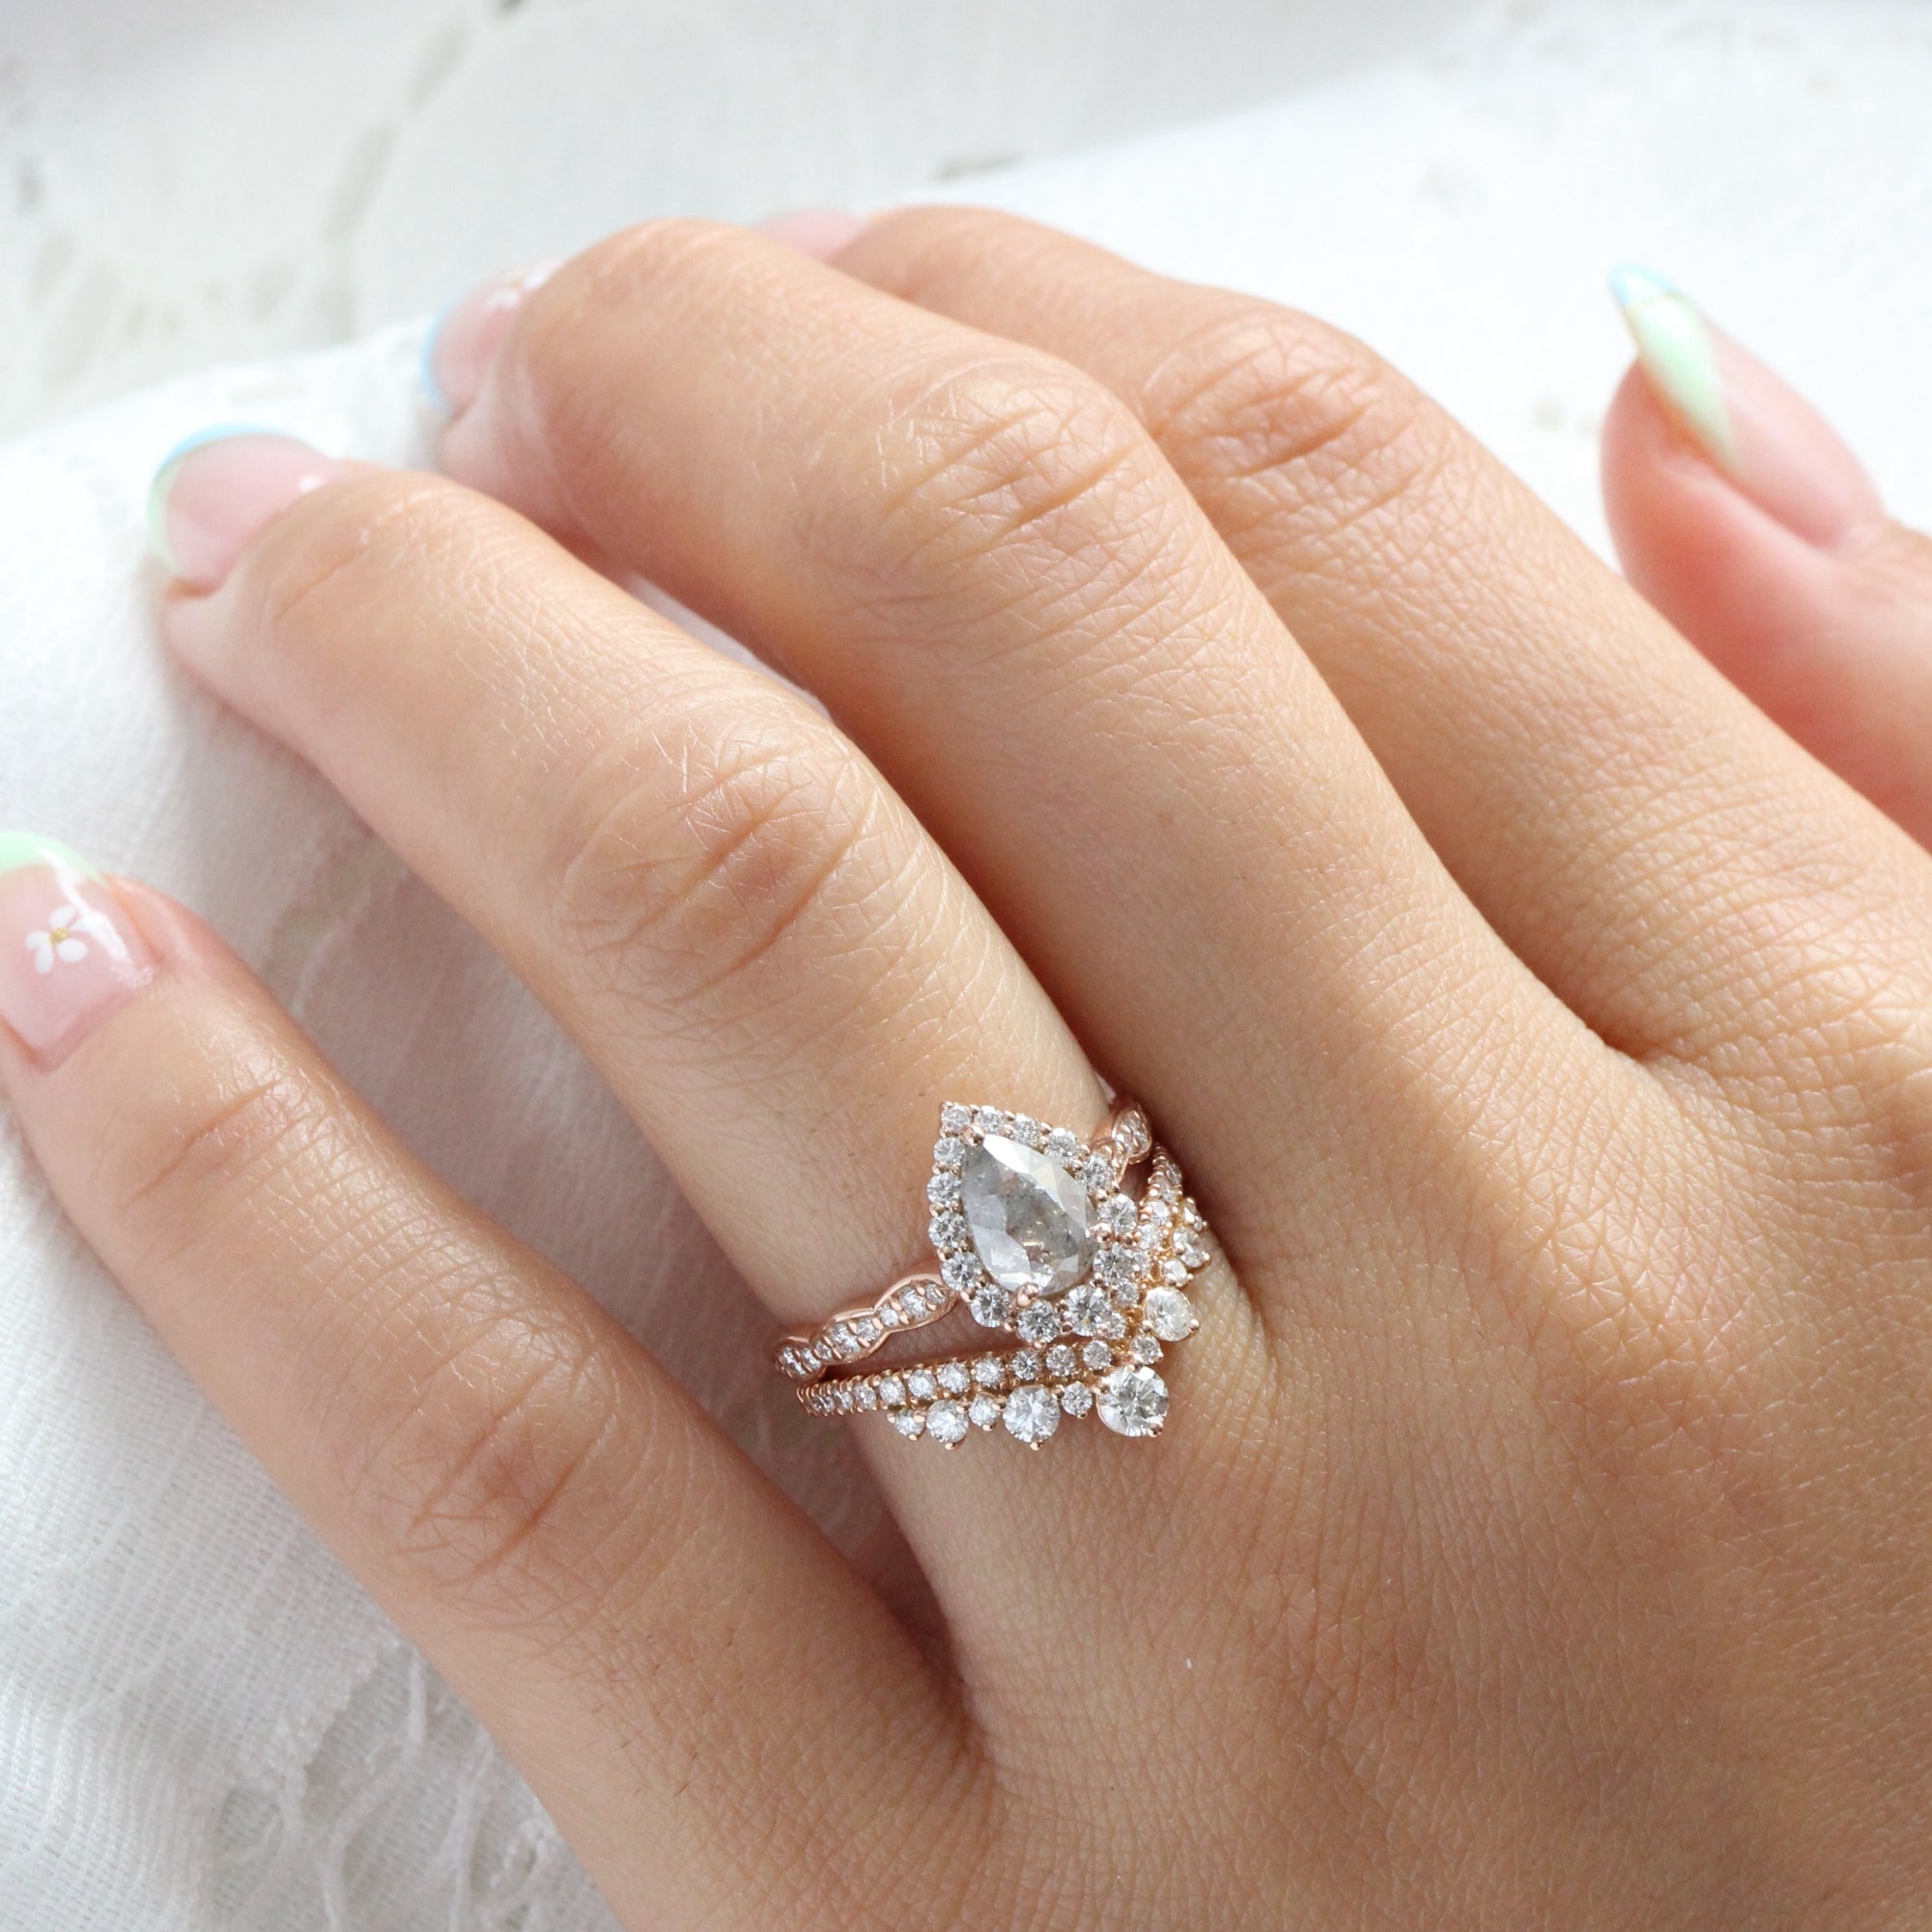 Pear salt and pepper diamond ring rose gold grey diamond halo ring la more design jewelry